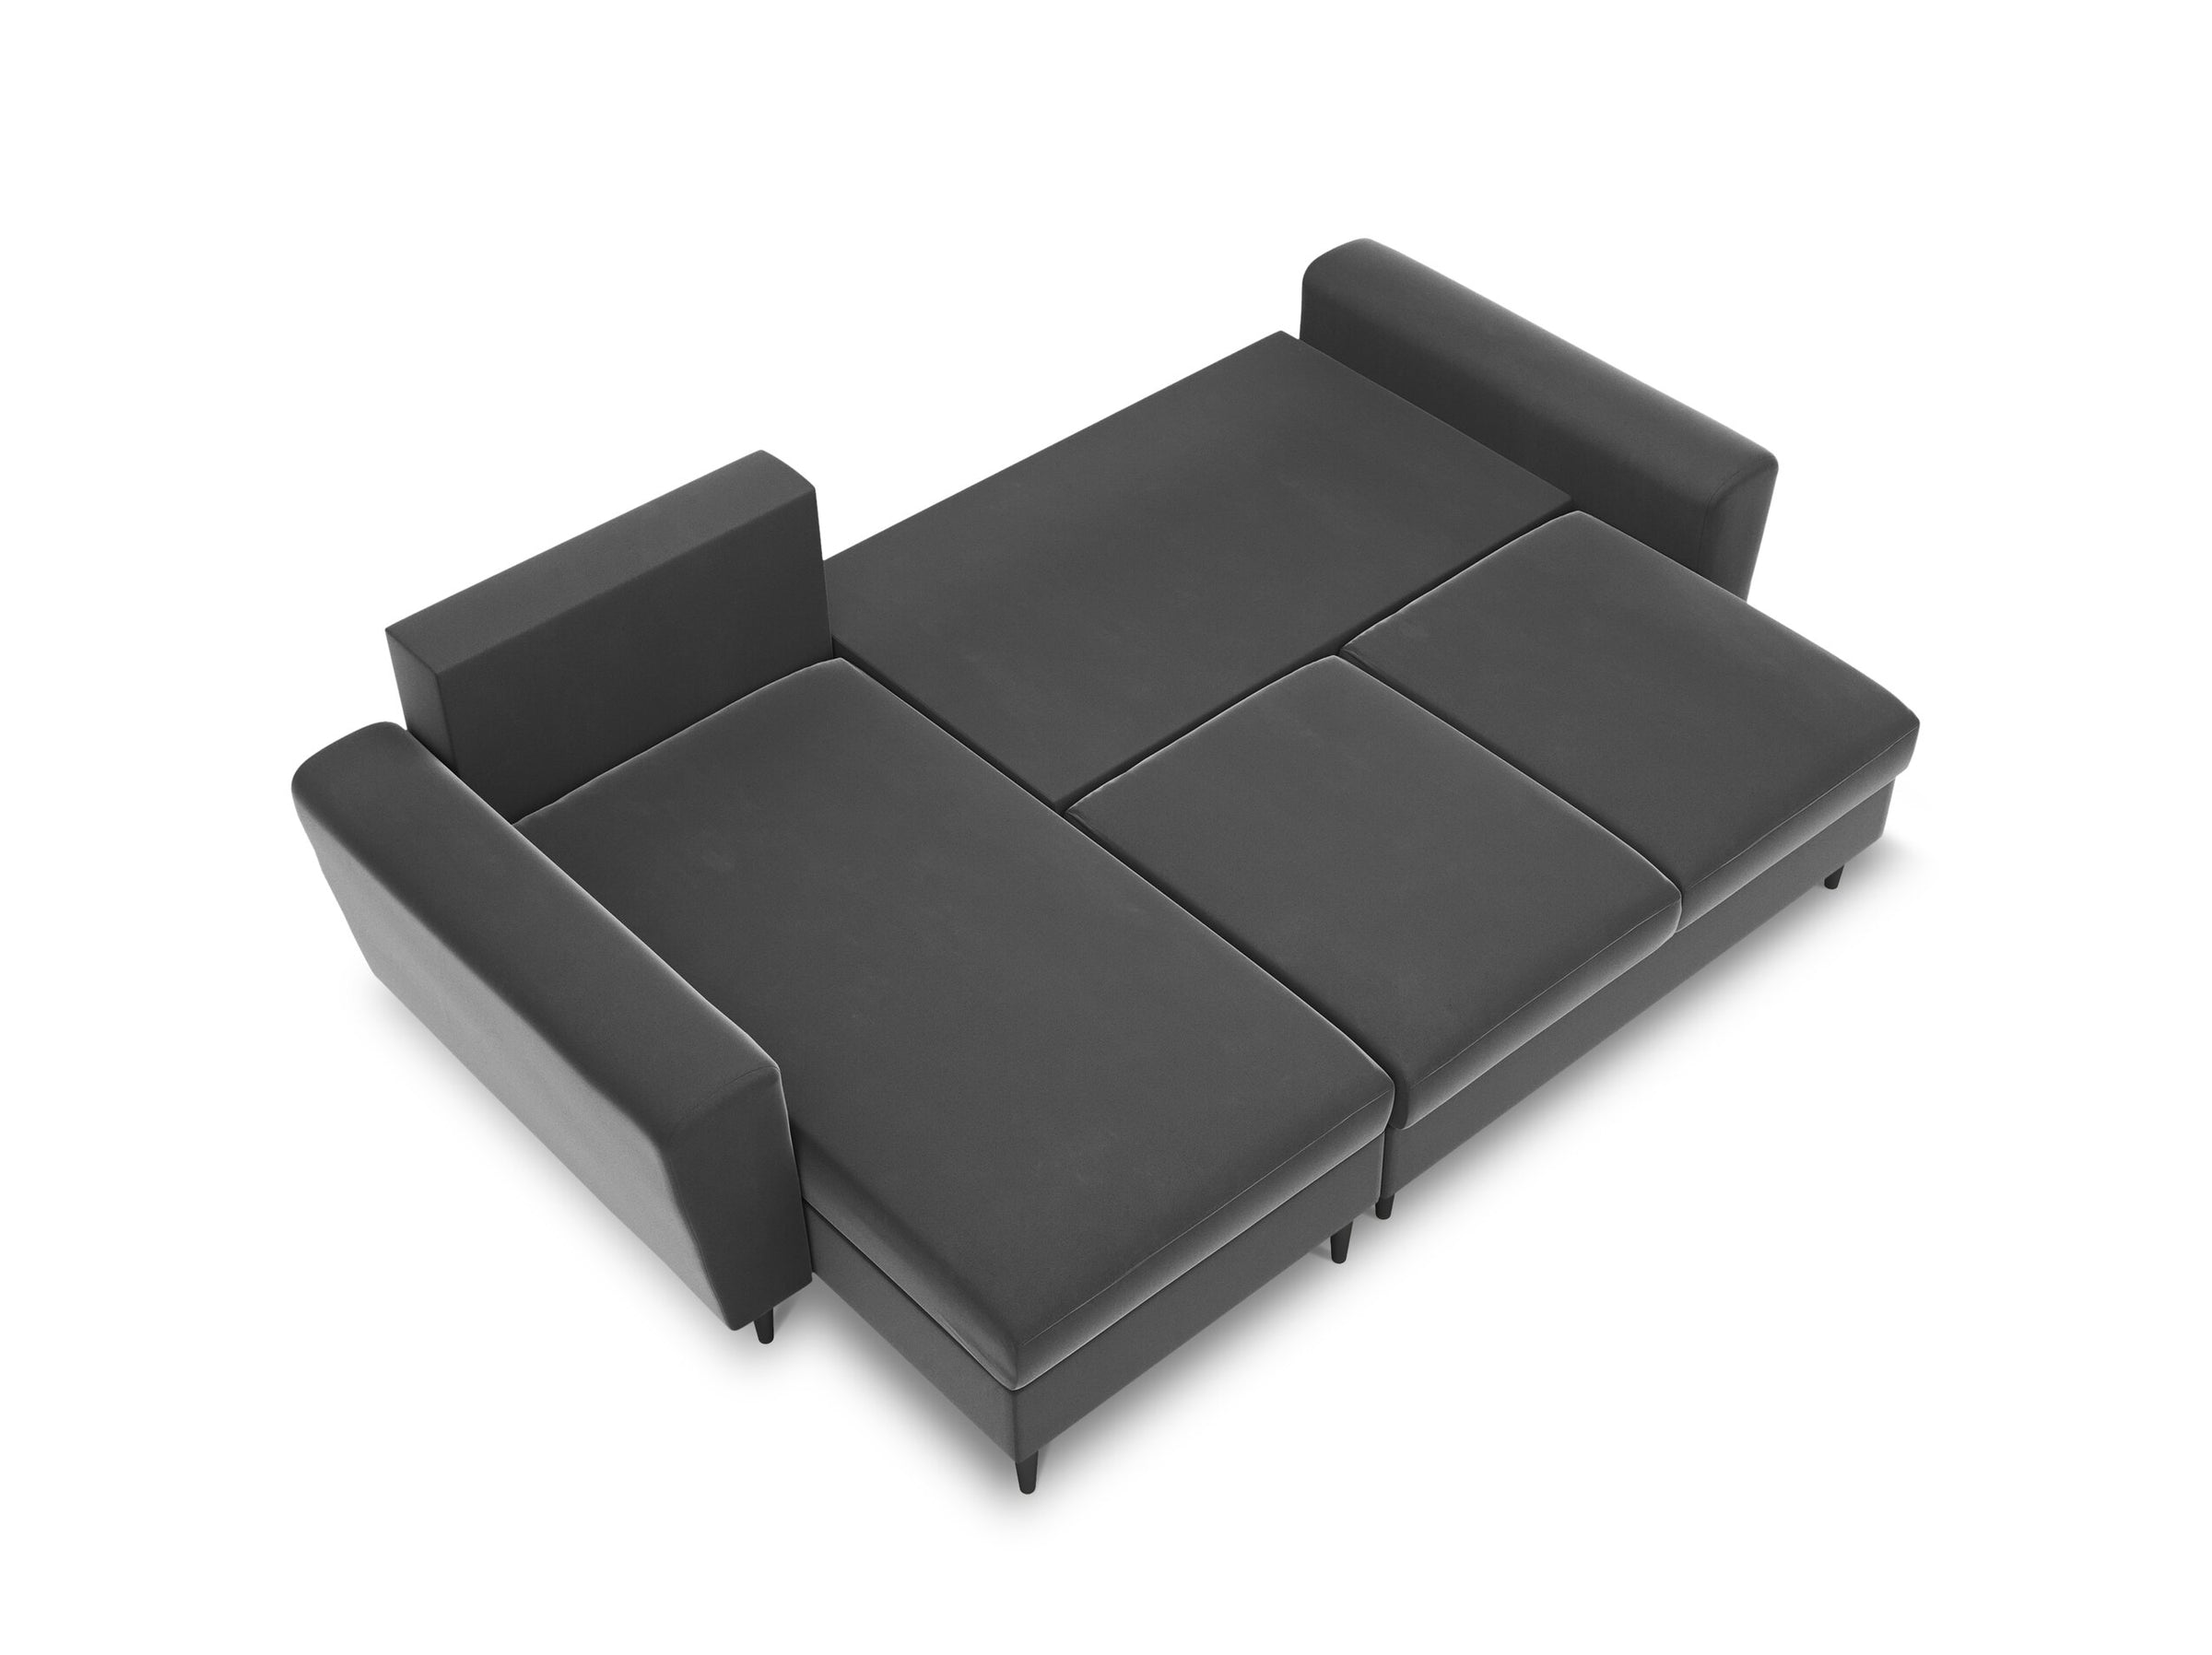 Moghan sofás velluto grigio chiaro